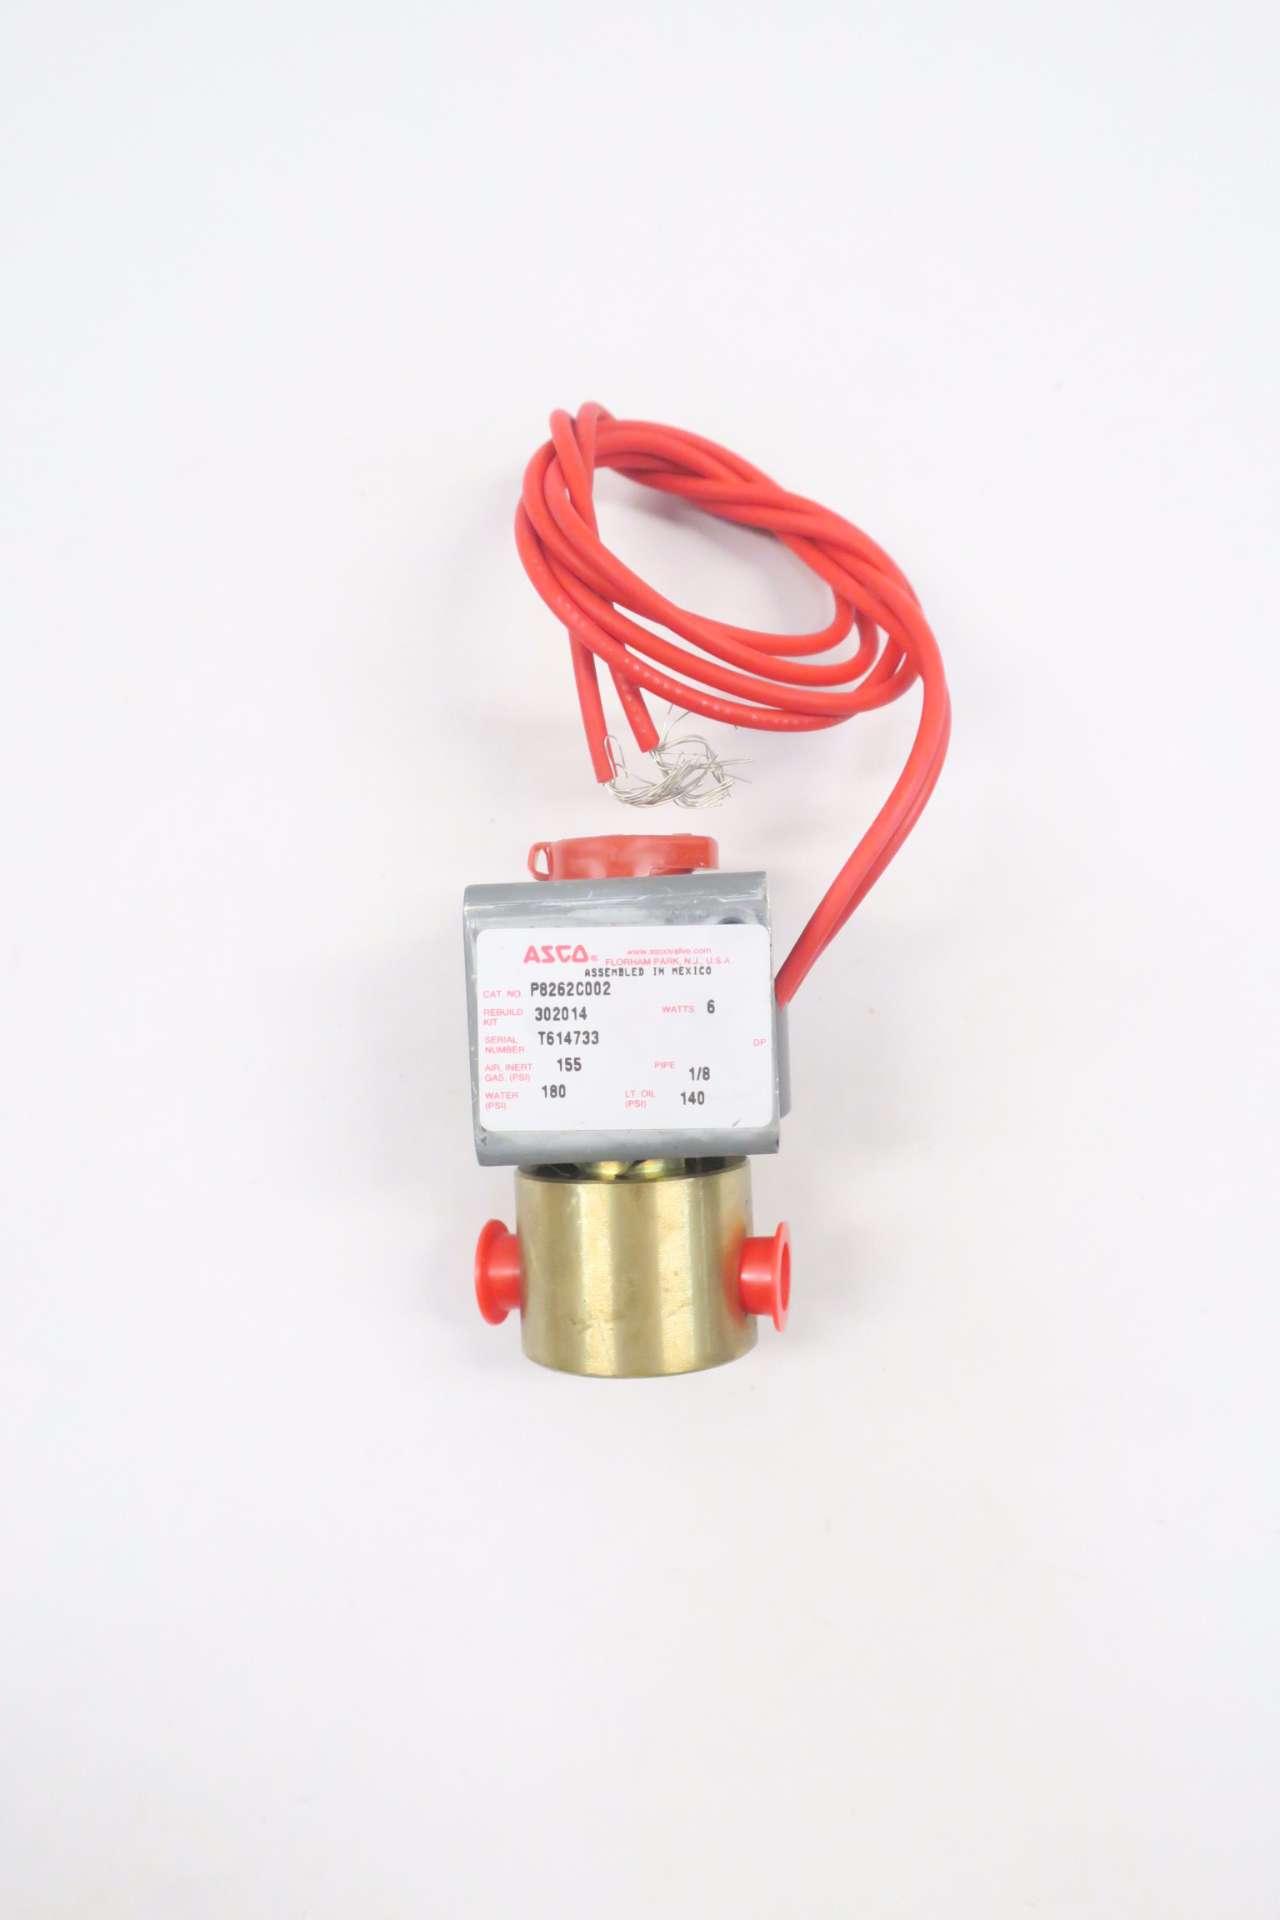 ASCO Red-Hat P262C202 # K R8B 9492 valve 